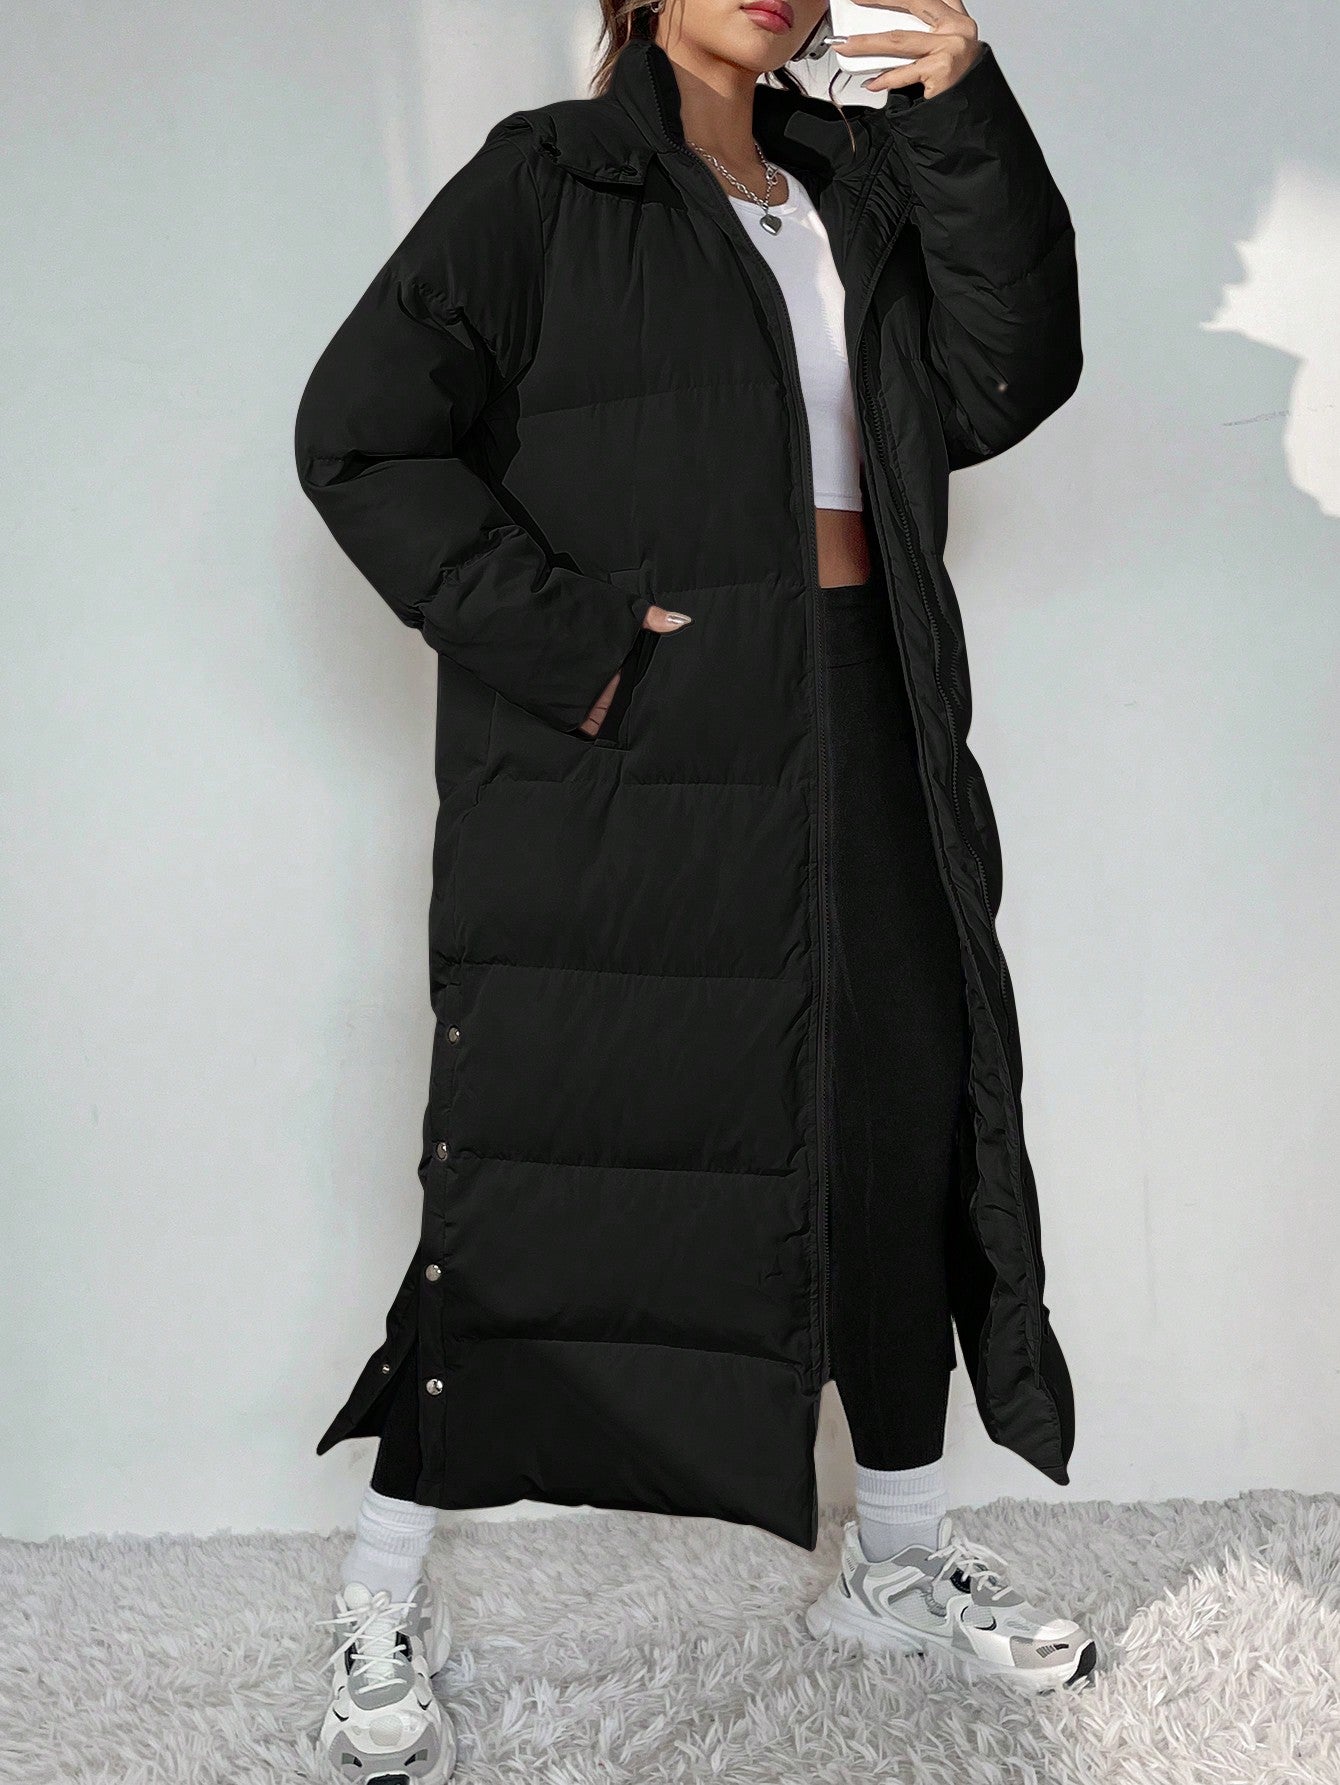 Ladies' Simple Solid Color Long Padded Coat Jacket